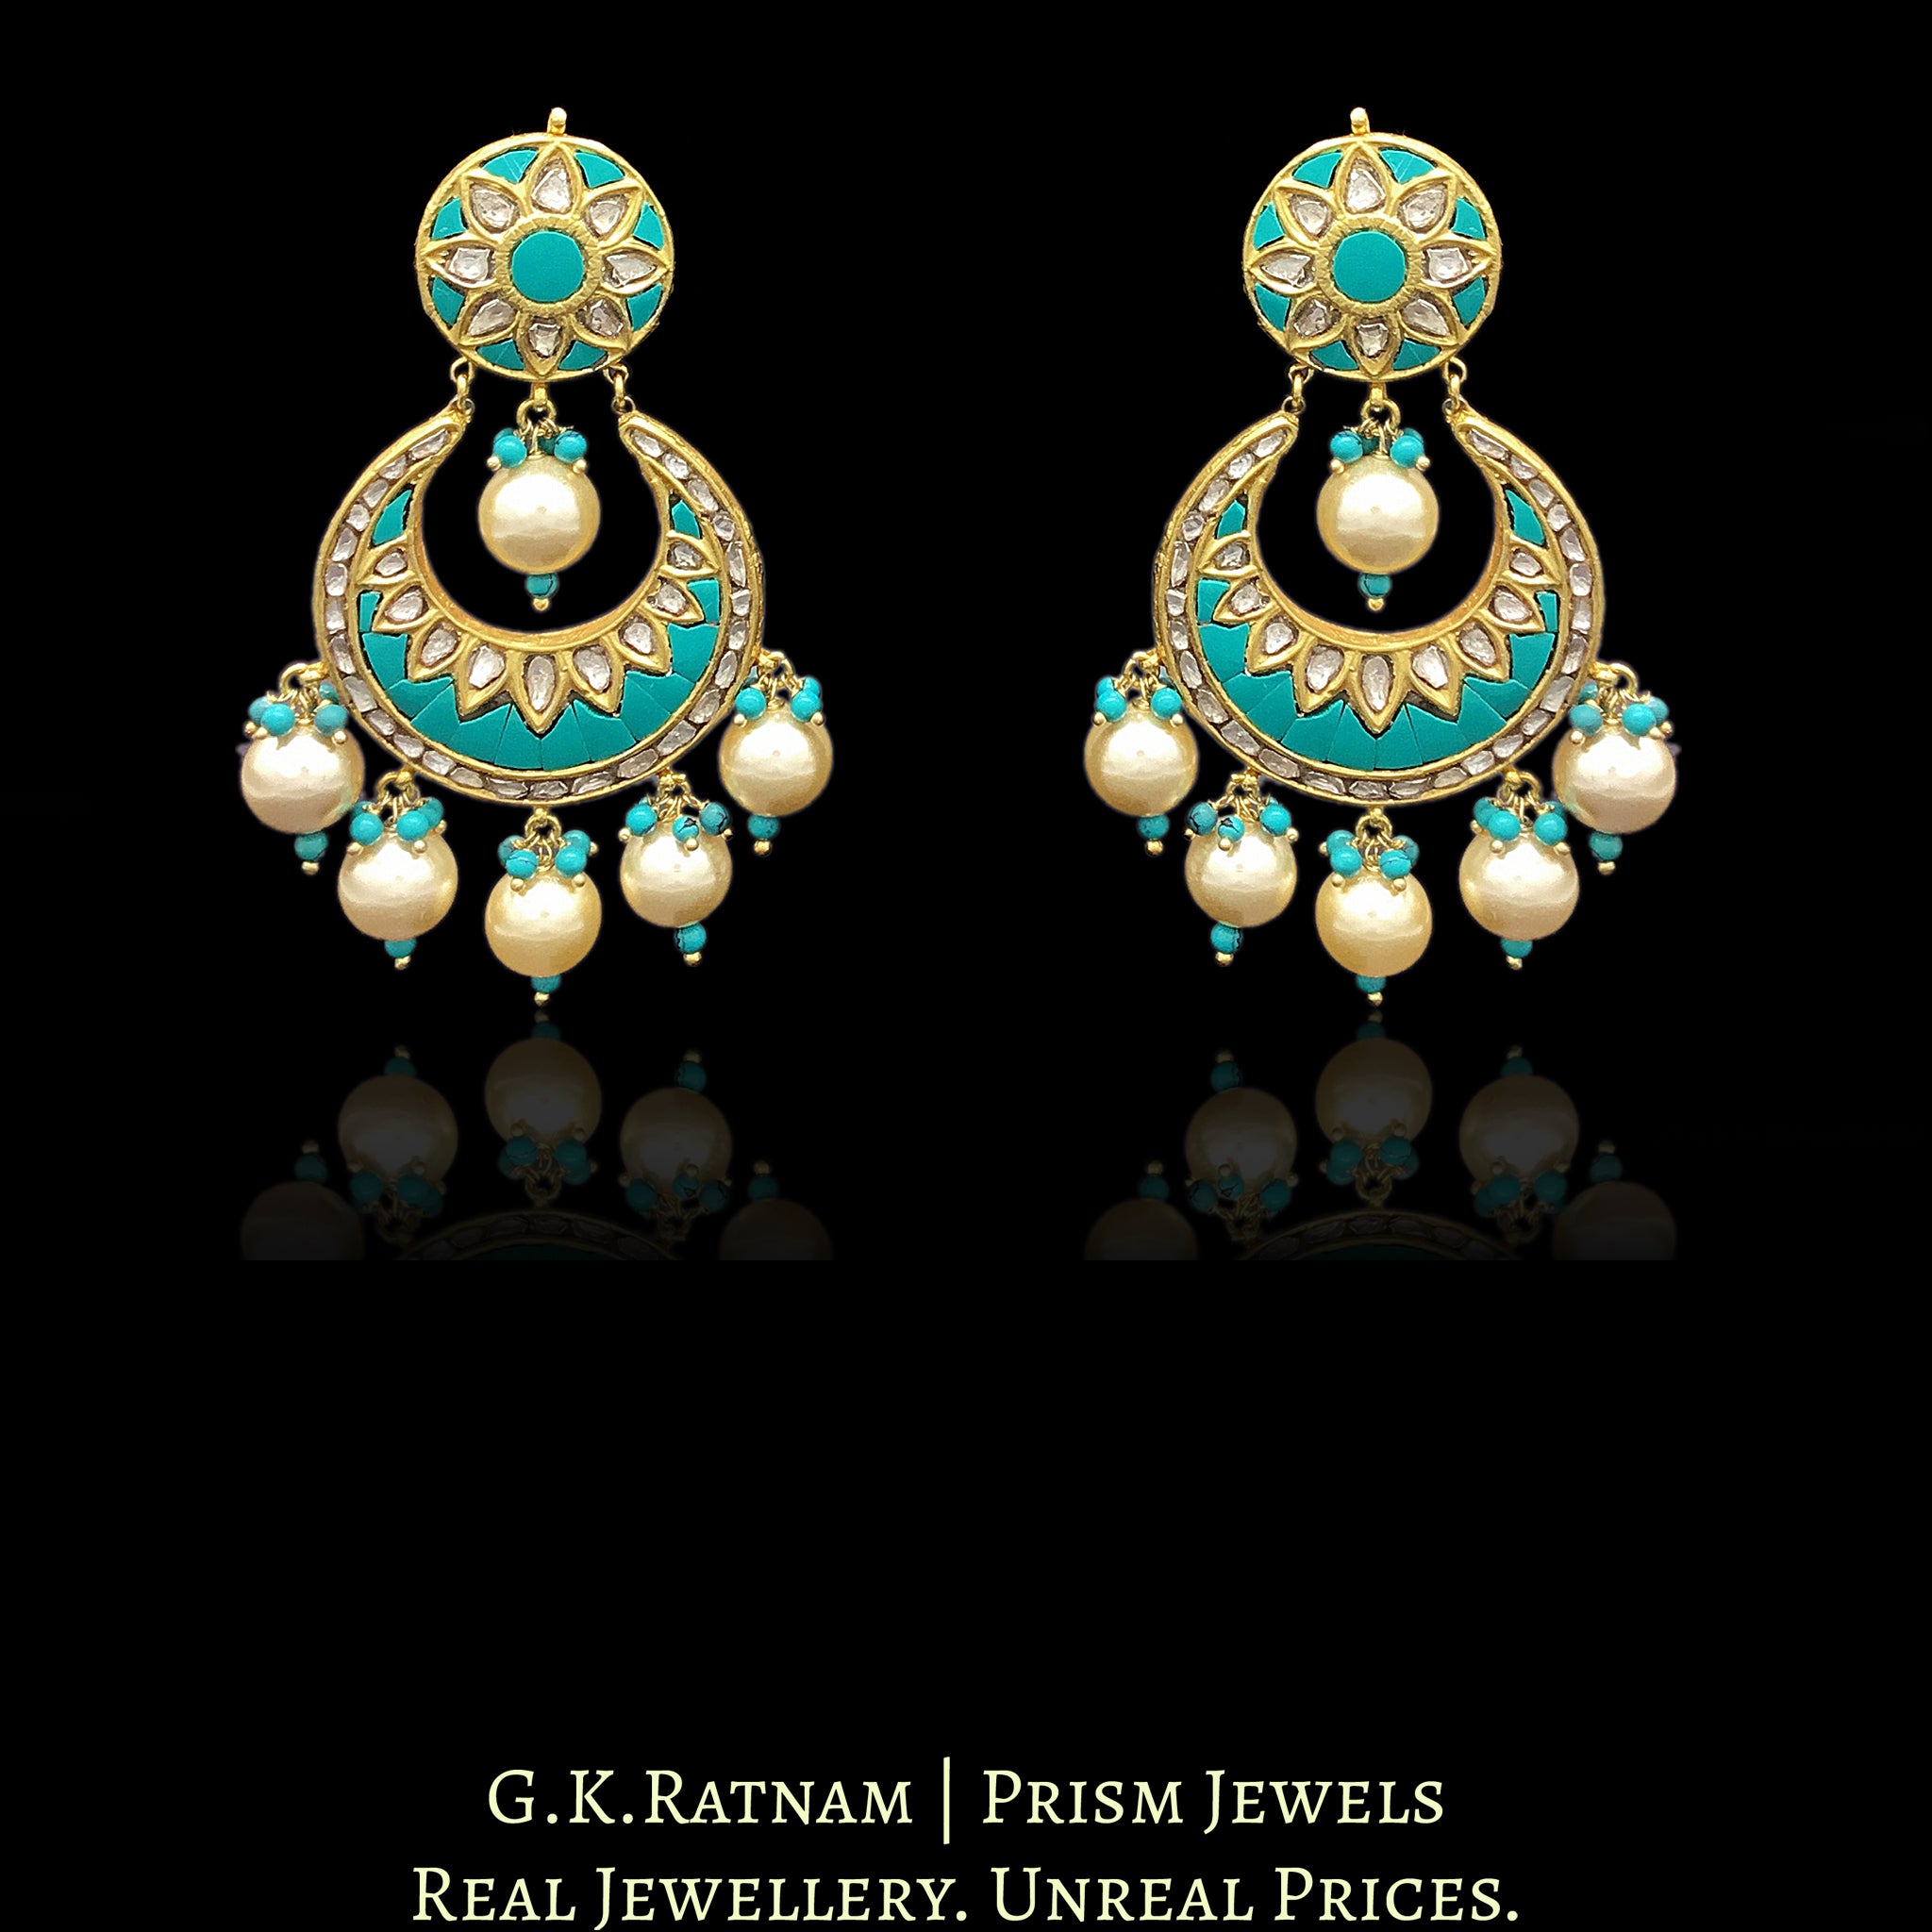 23k Gold and Diamond Polki Chand Bali Earring Pair with Firoza - G. K. Ratnam